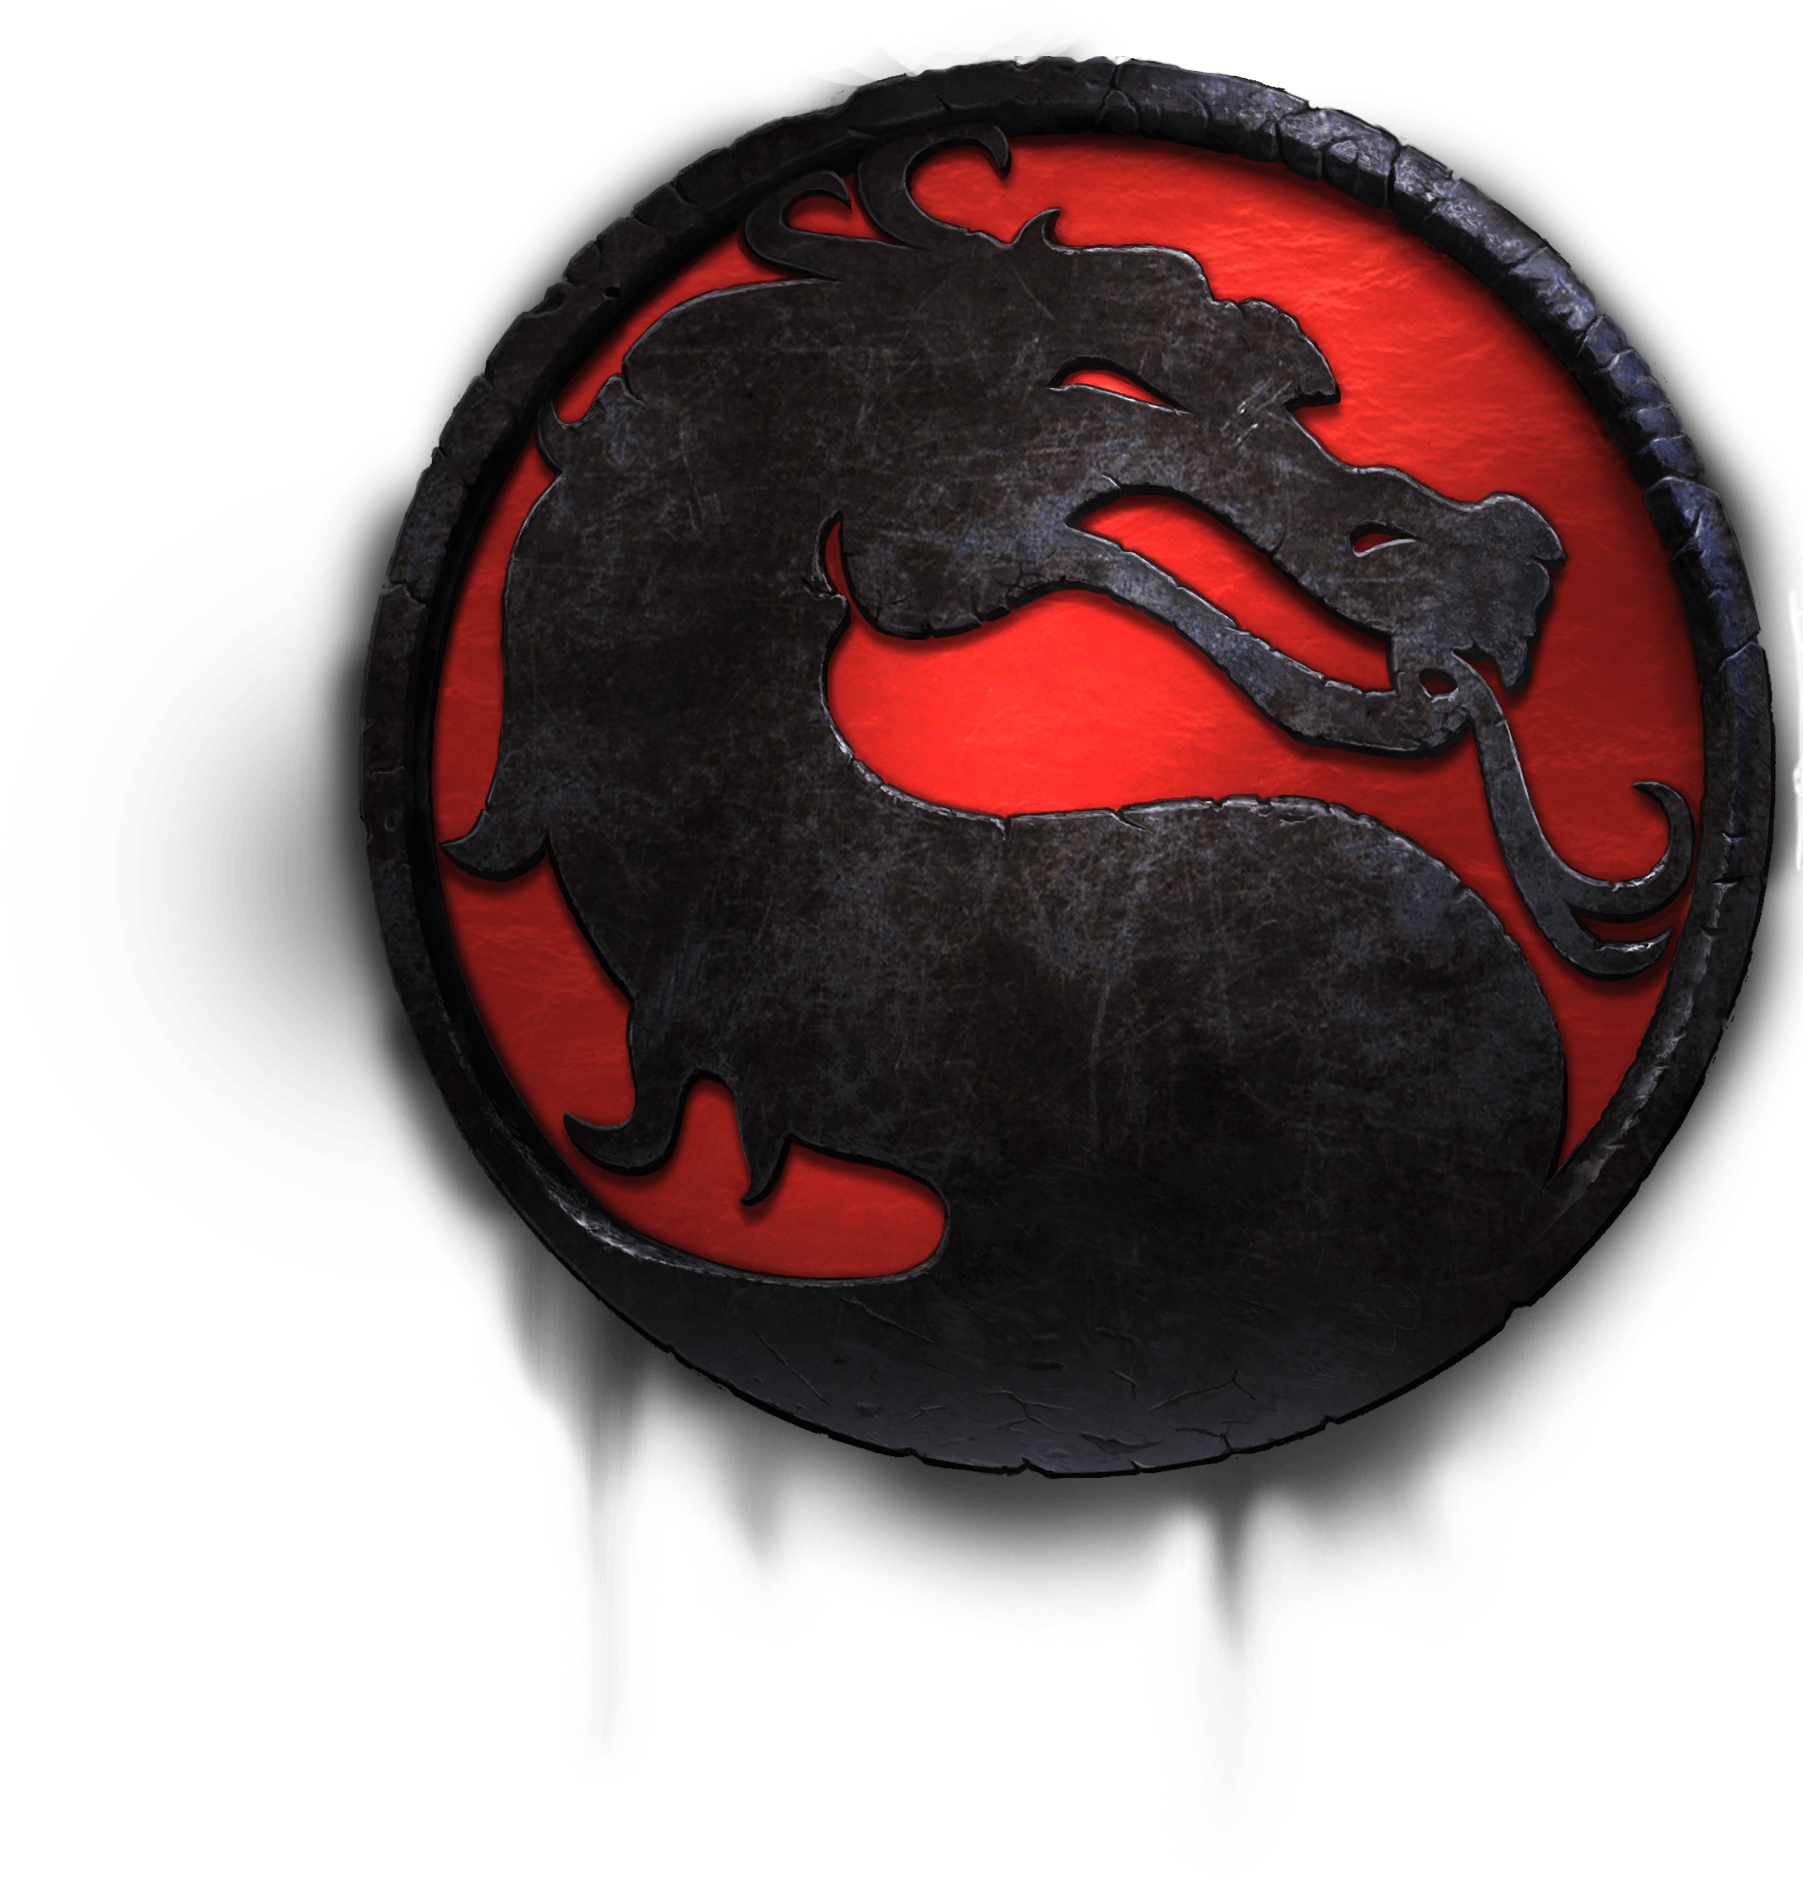 Mortal Kombat Video Game PNG Image Background